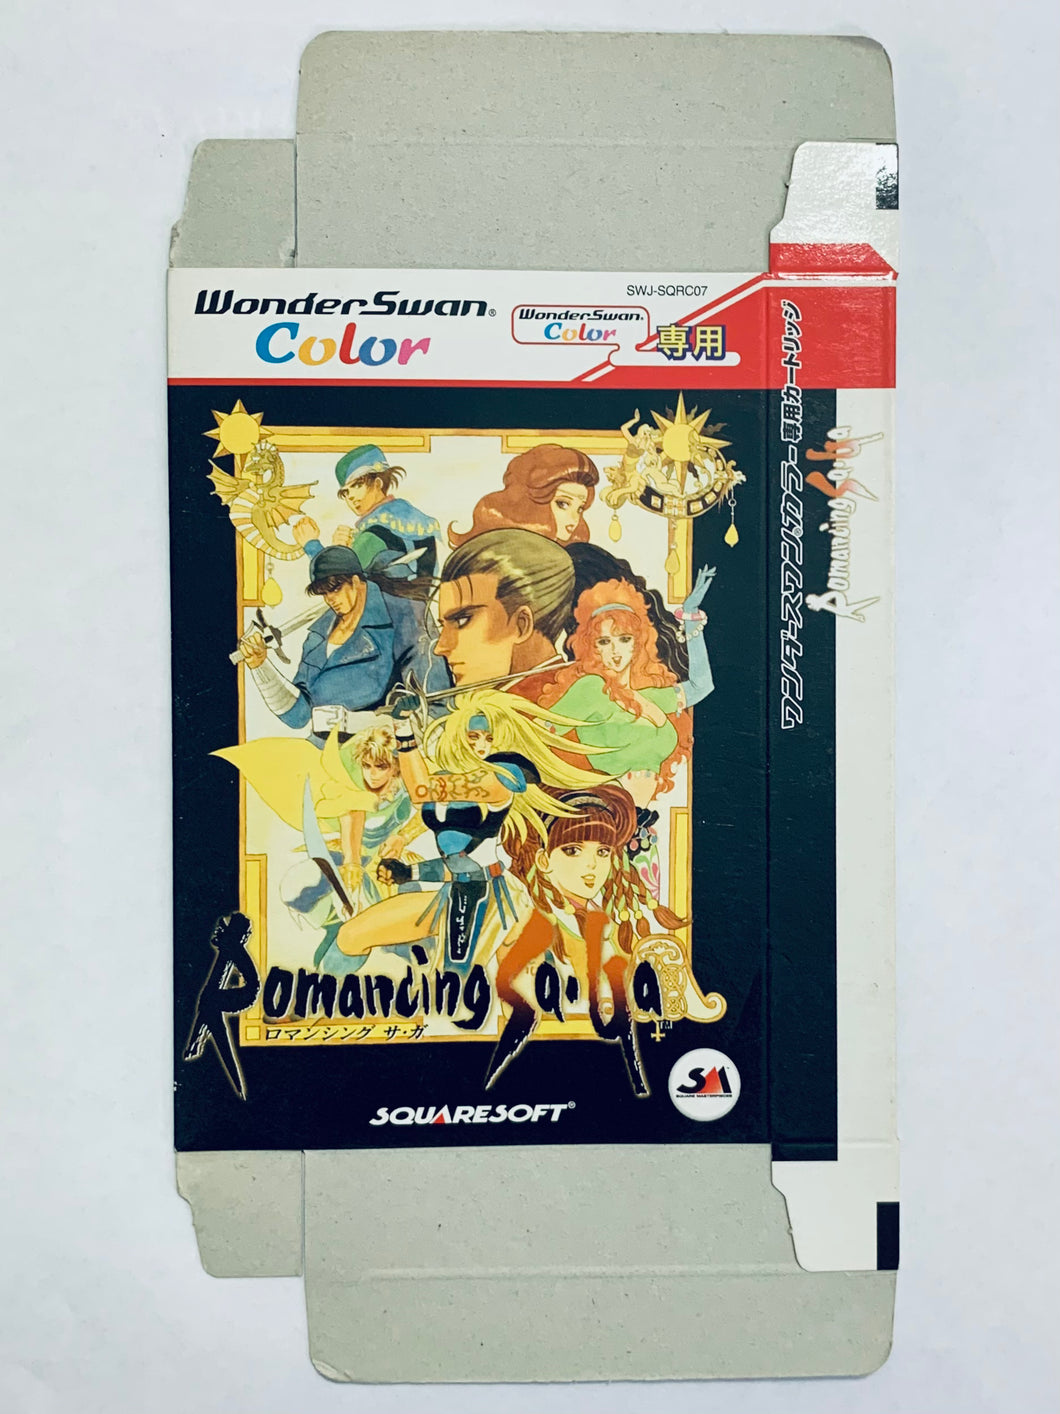 Romancing SaGa - WonderSwan Color - WSC - JP - Box Only (SWJ-SQRC07)